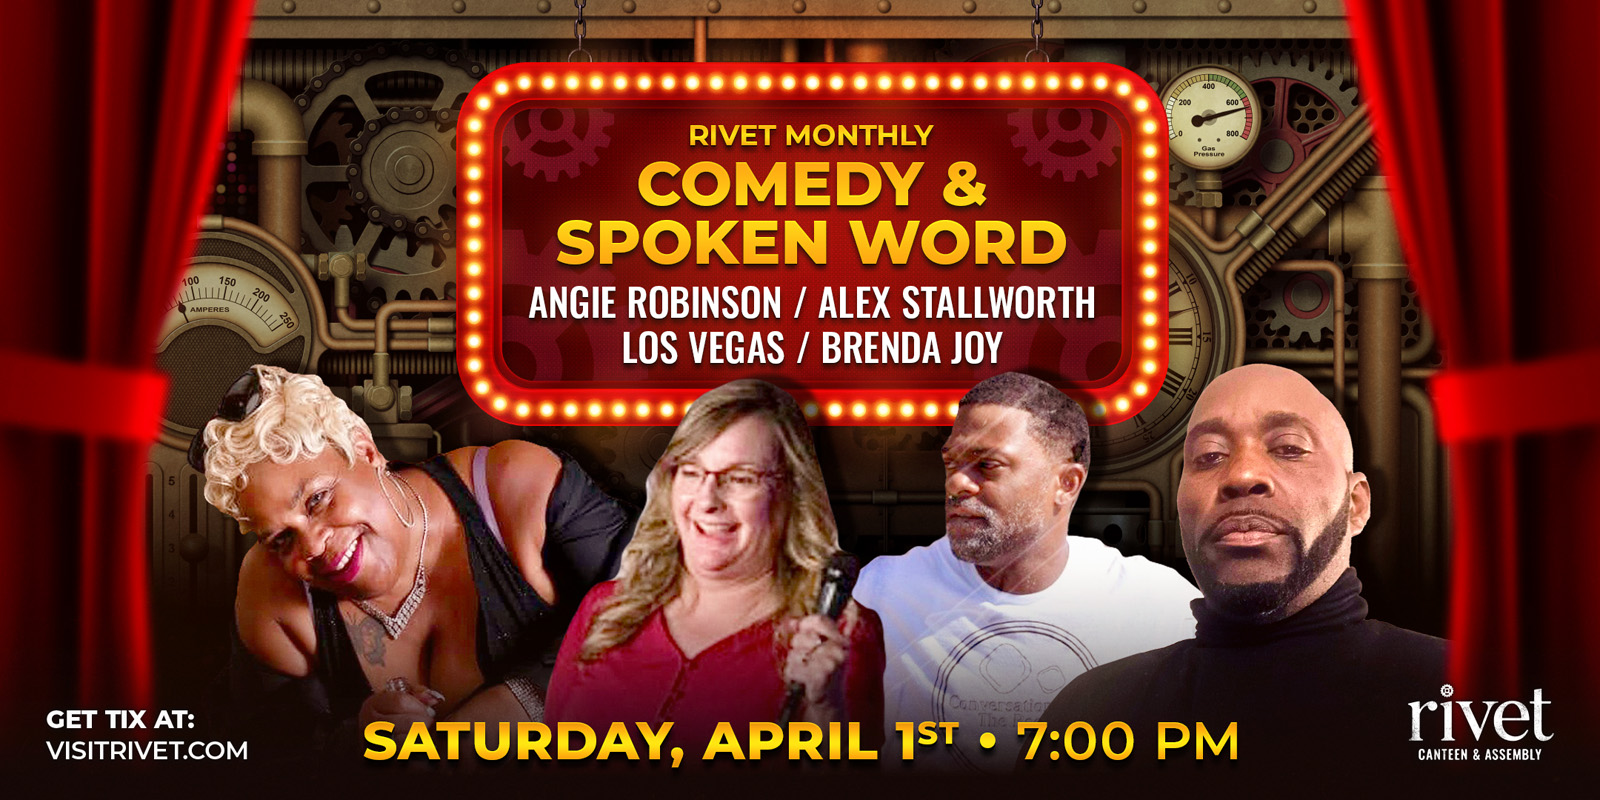 Comedy & Spoken Word Event: Angie Robinson, Alex Stallworth, Los Vegas & Brenda Joy at Rivet on Saturday, April 1st starting at 7PM!